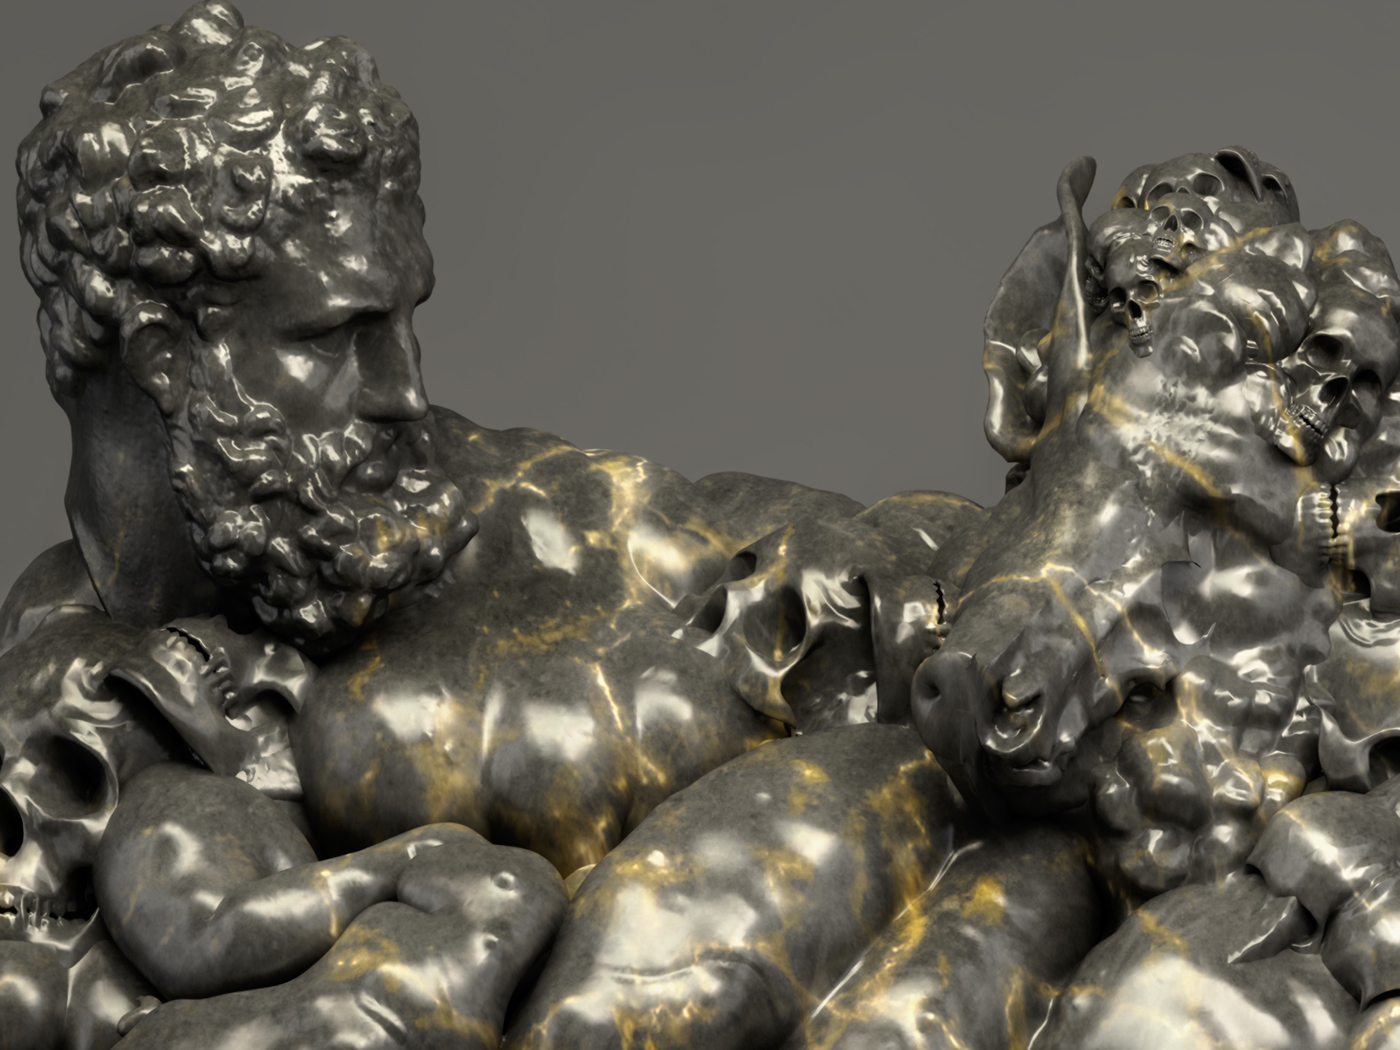 3D CGI dark digital Render 3dcoat Sculpt c4d 3D Marble gold skin acephales anarchy bataille anarchism